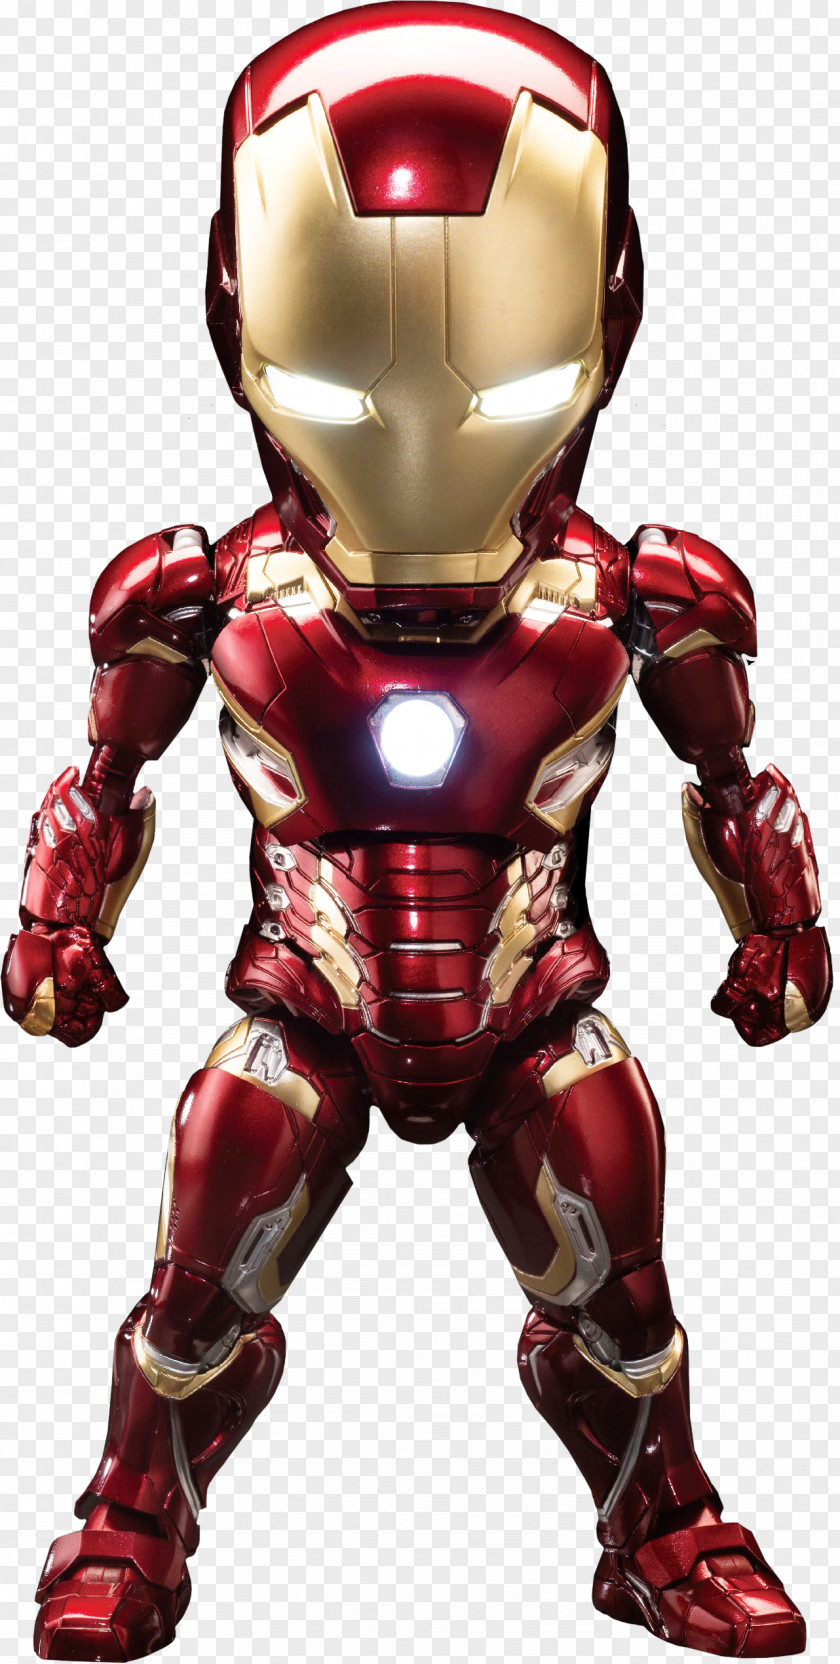 Iron Man Ultron Hulk Captain America Action & Toy Figures PNG